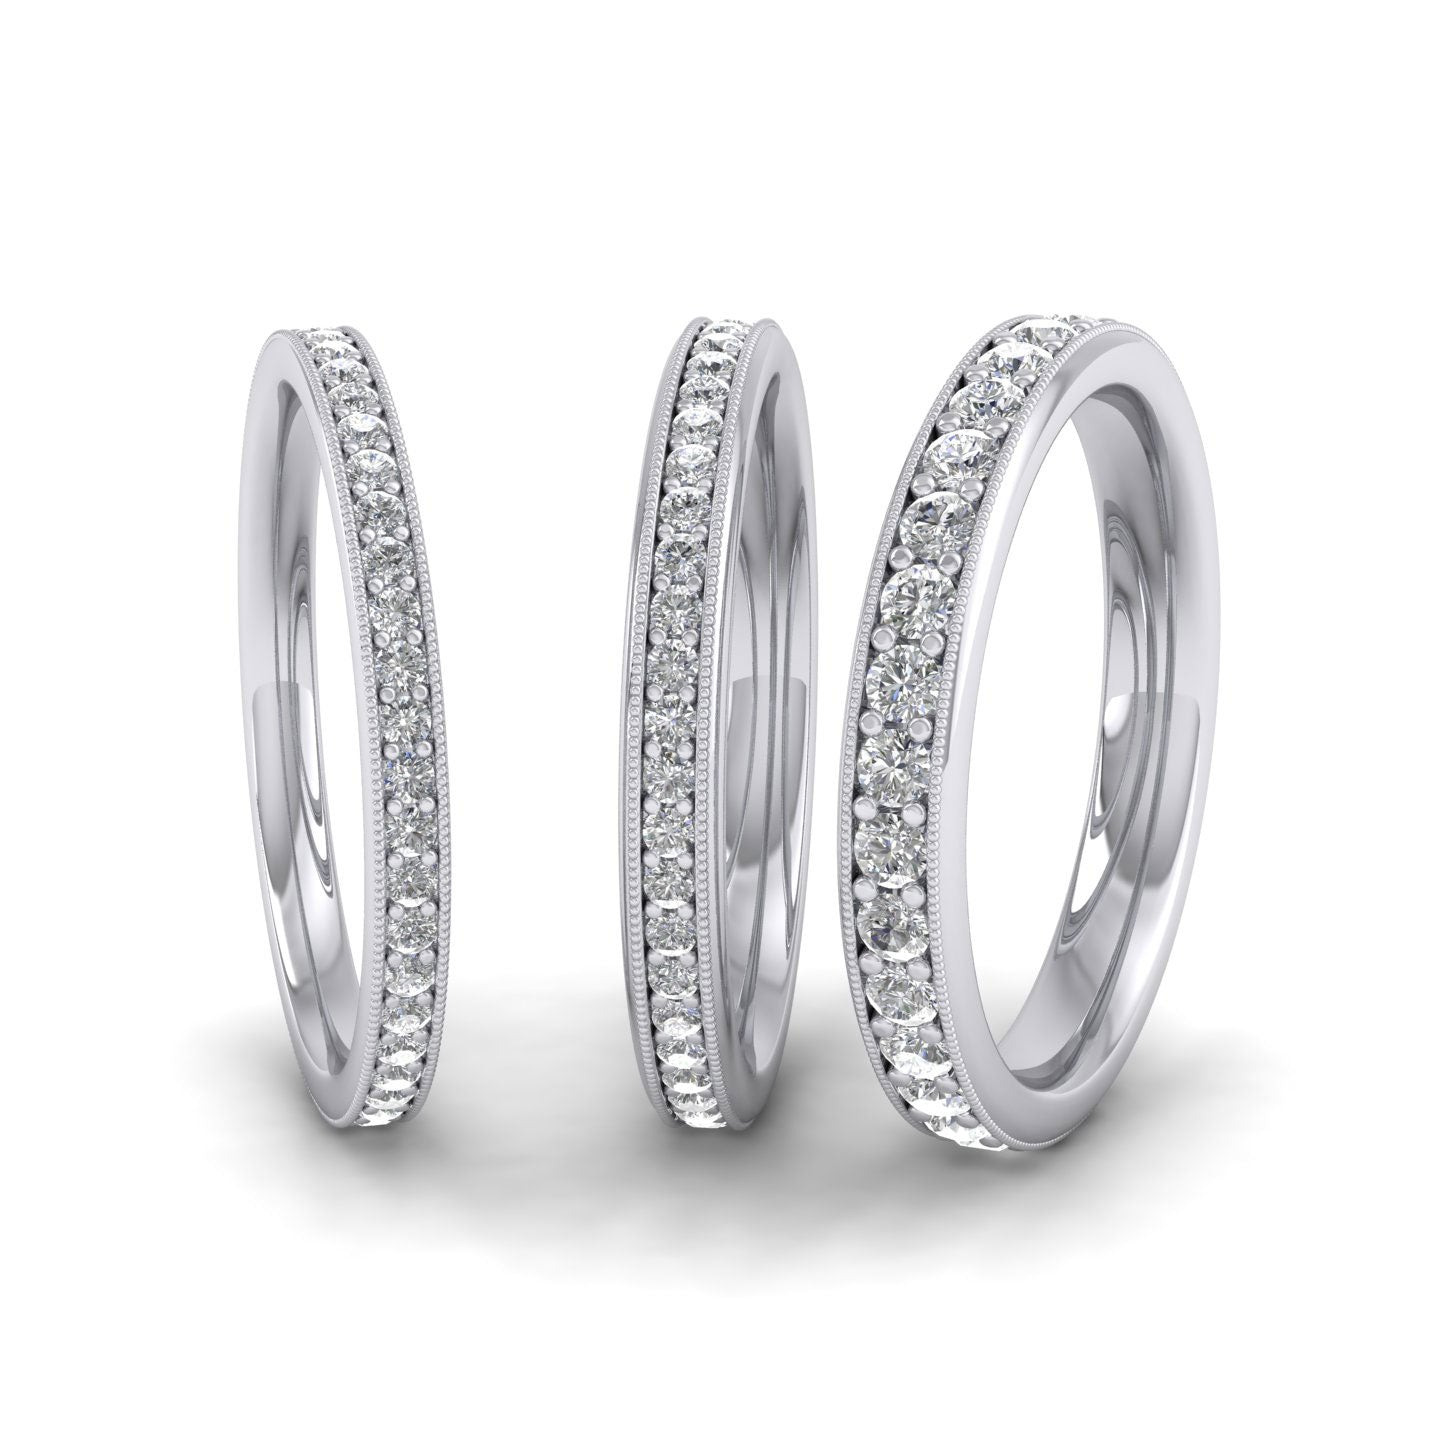 Full Bead Set 0.8ct Round Brilliant Cut Diamond With Millgrain Surround 18ct White Gold 3mm Wedding Ring